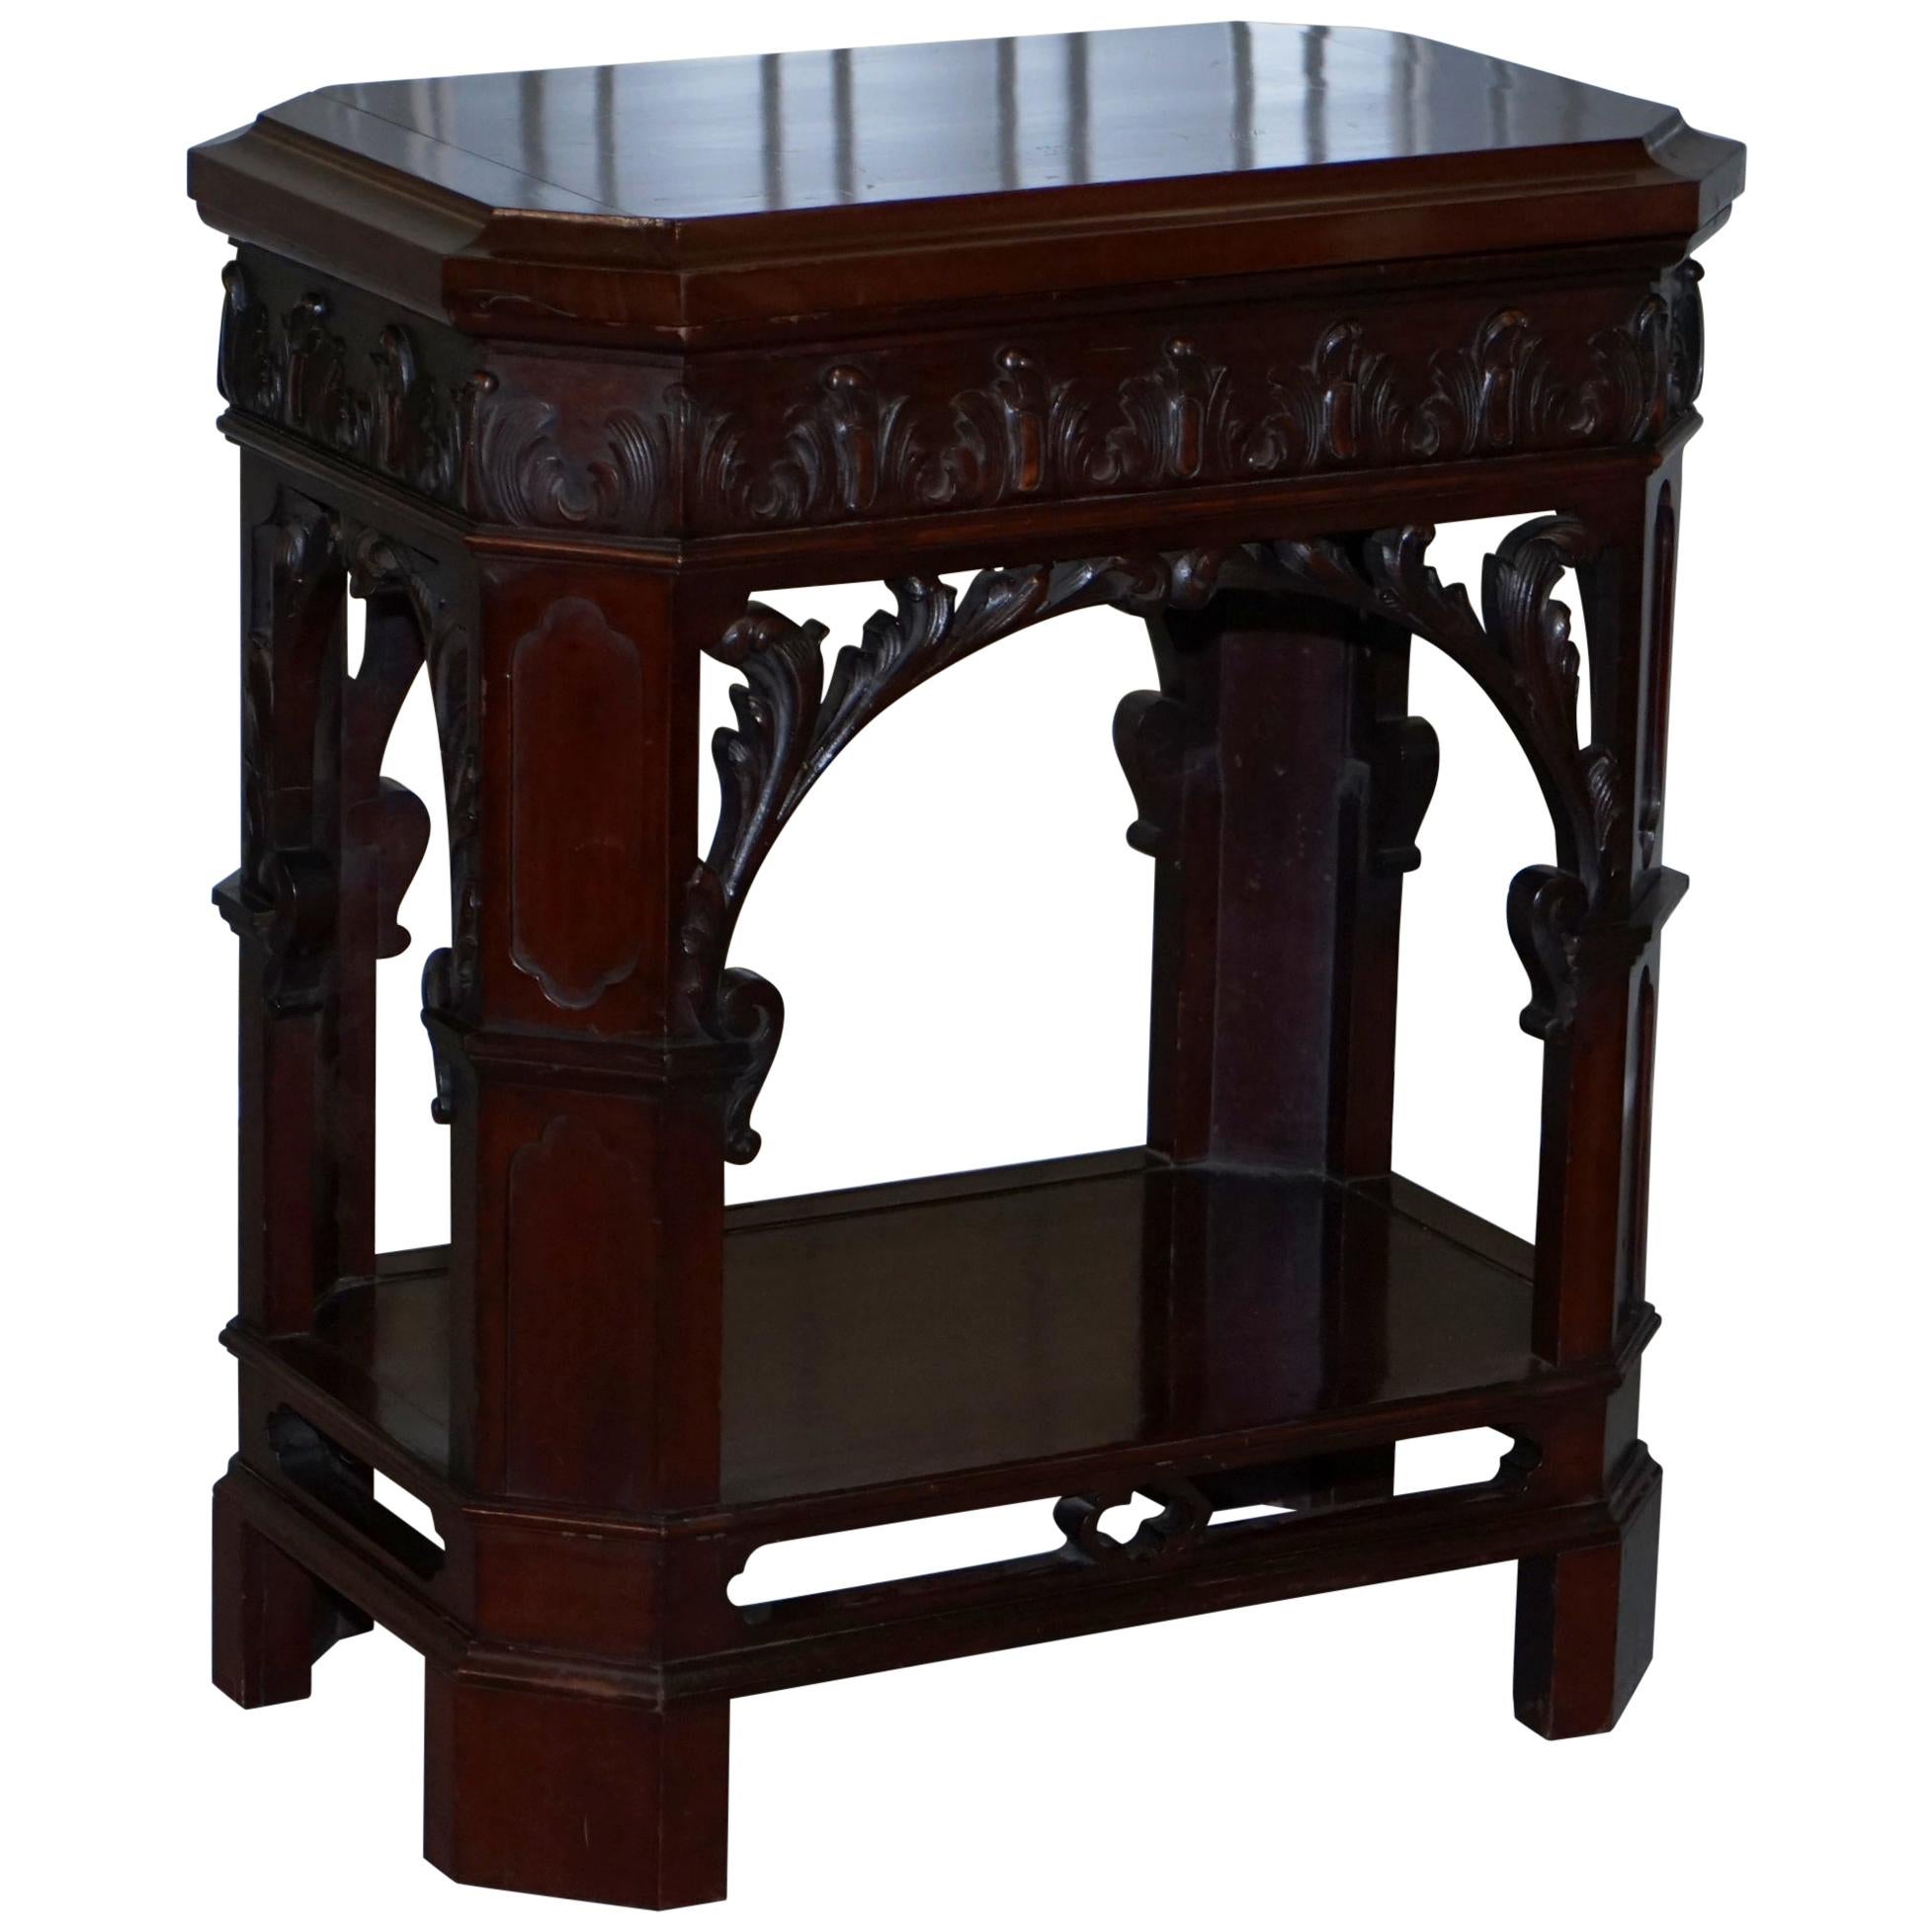 Morison & Co Edinburgh Chippendale circa 1840 Hardwood Revolving Display Stand